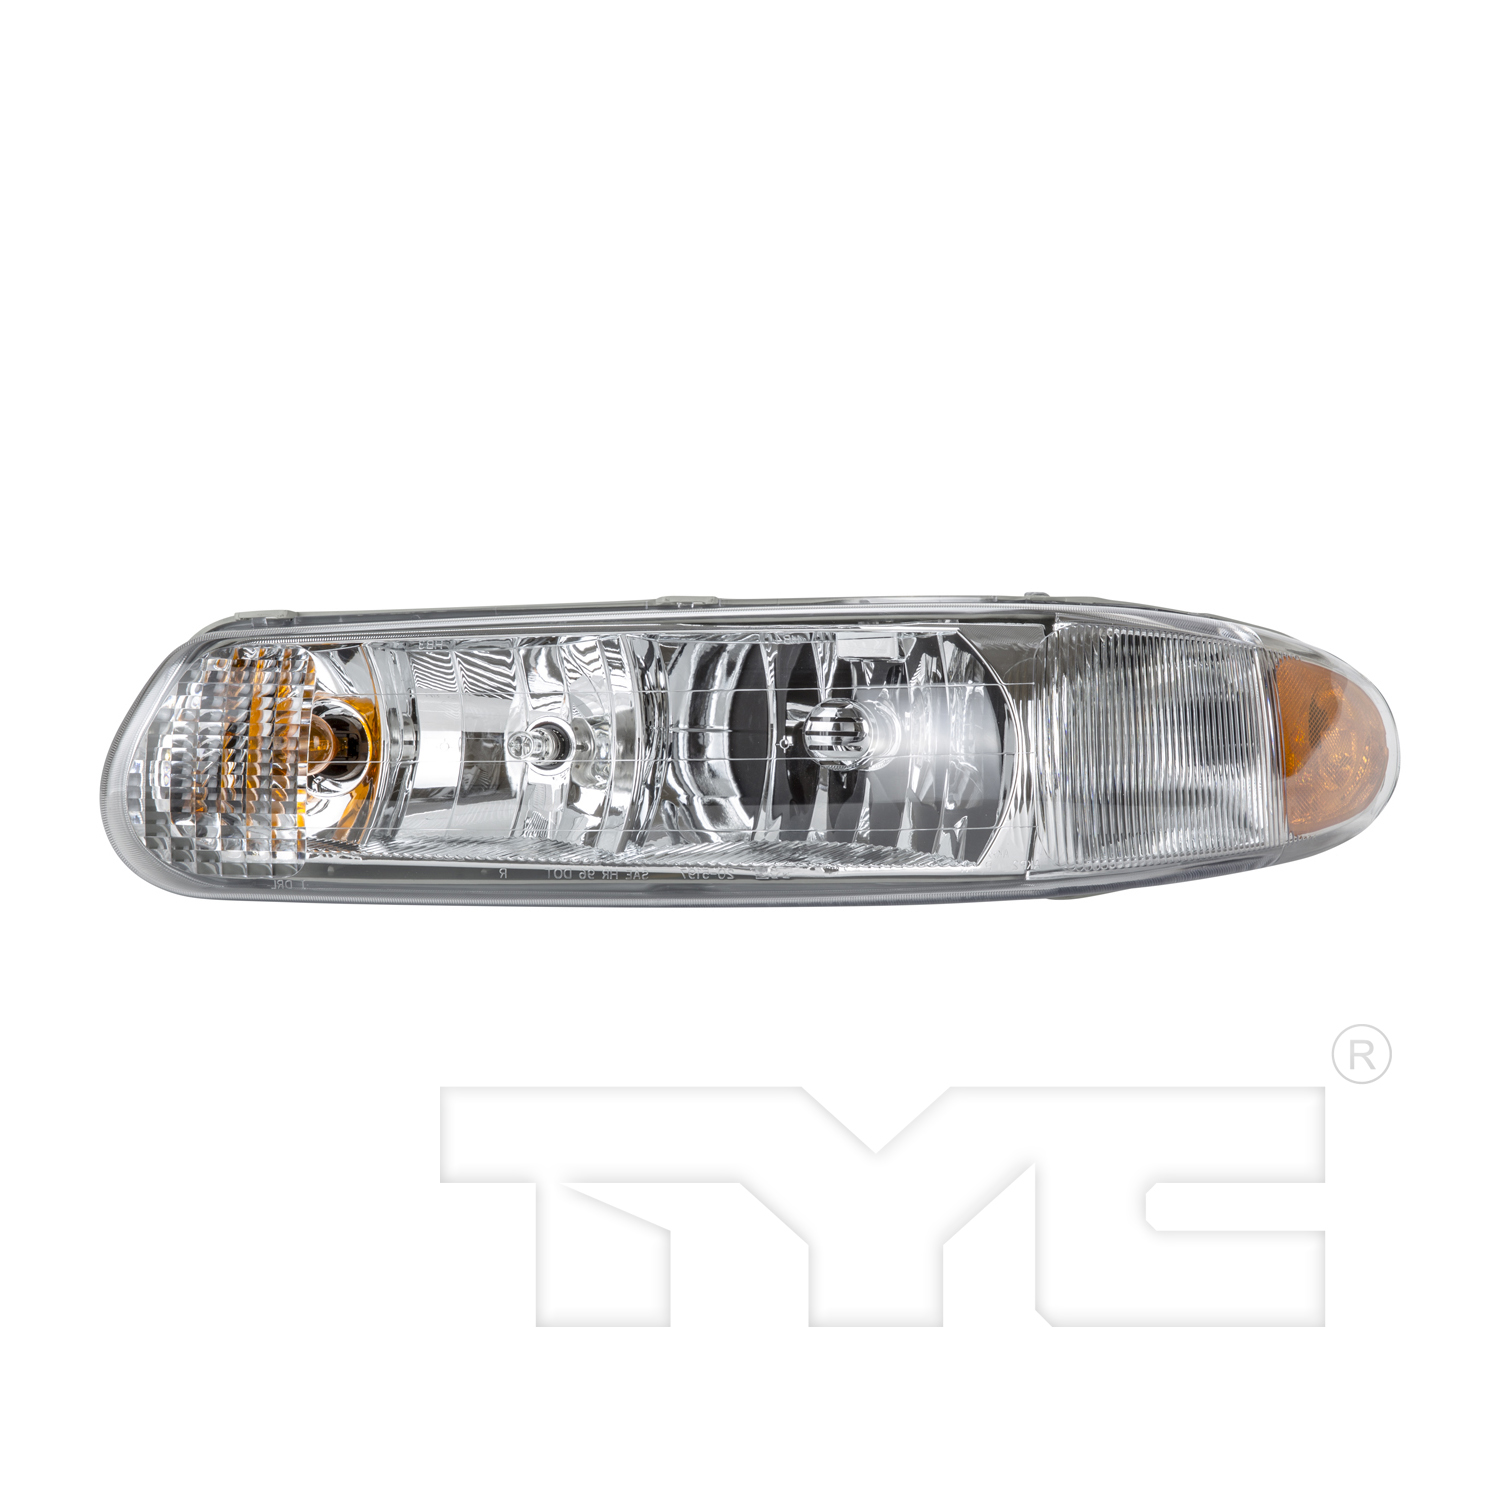 Aftermarket HEADLIGHTS for BUICK - REGAL, REGAL,97-04,LT Headlamp assy composite